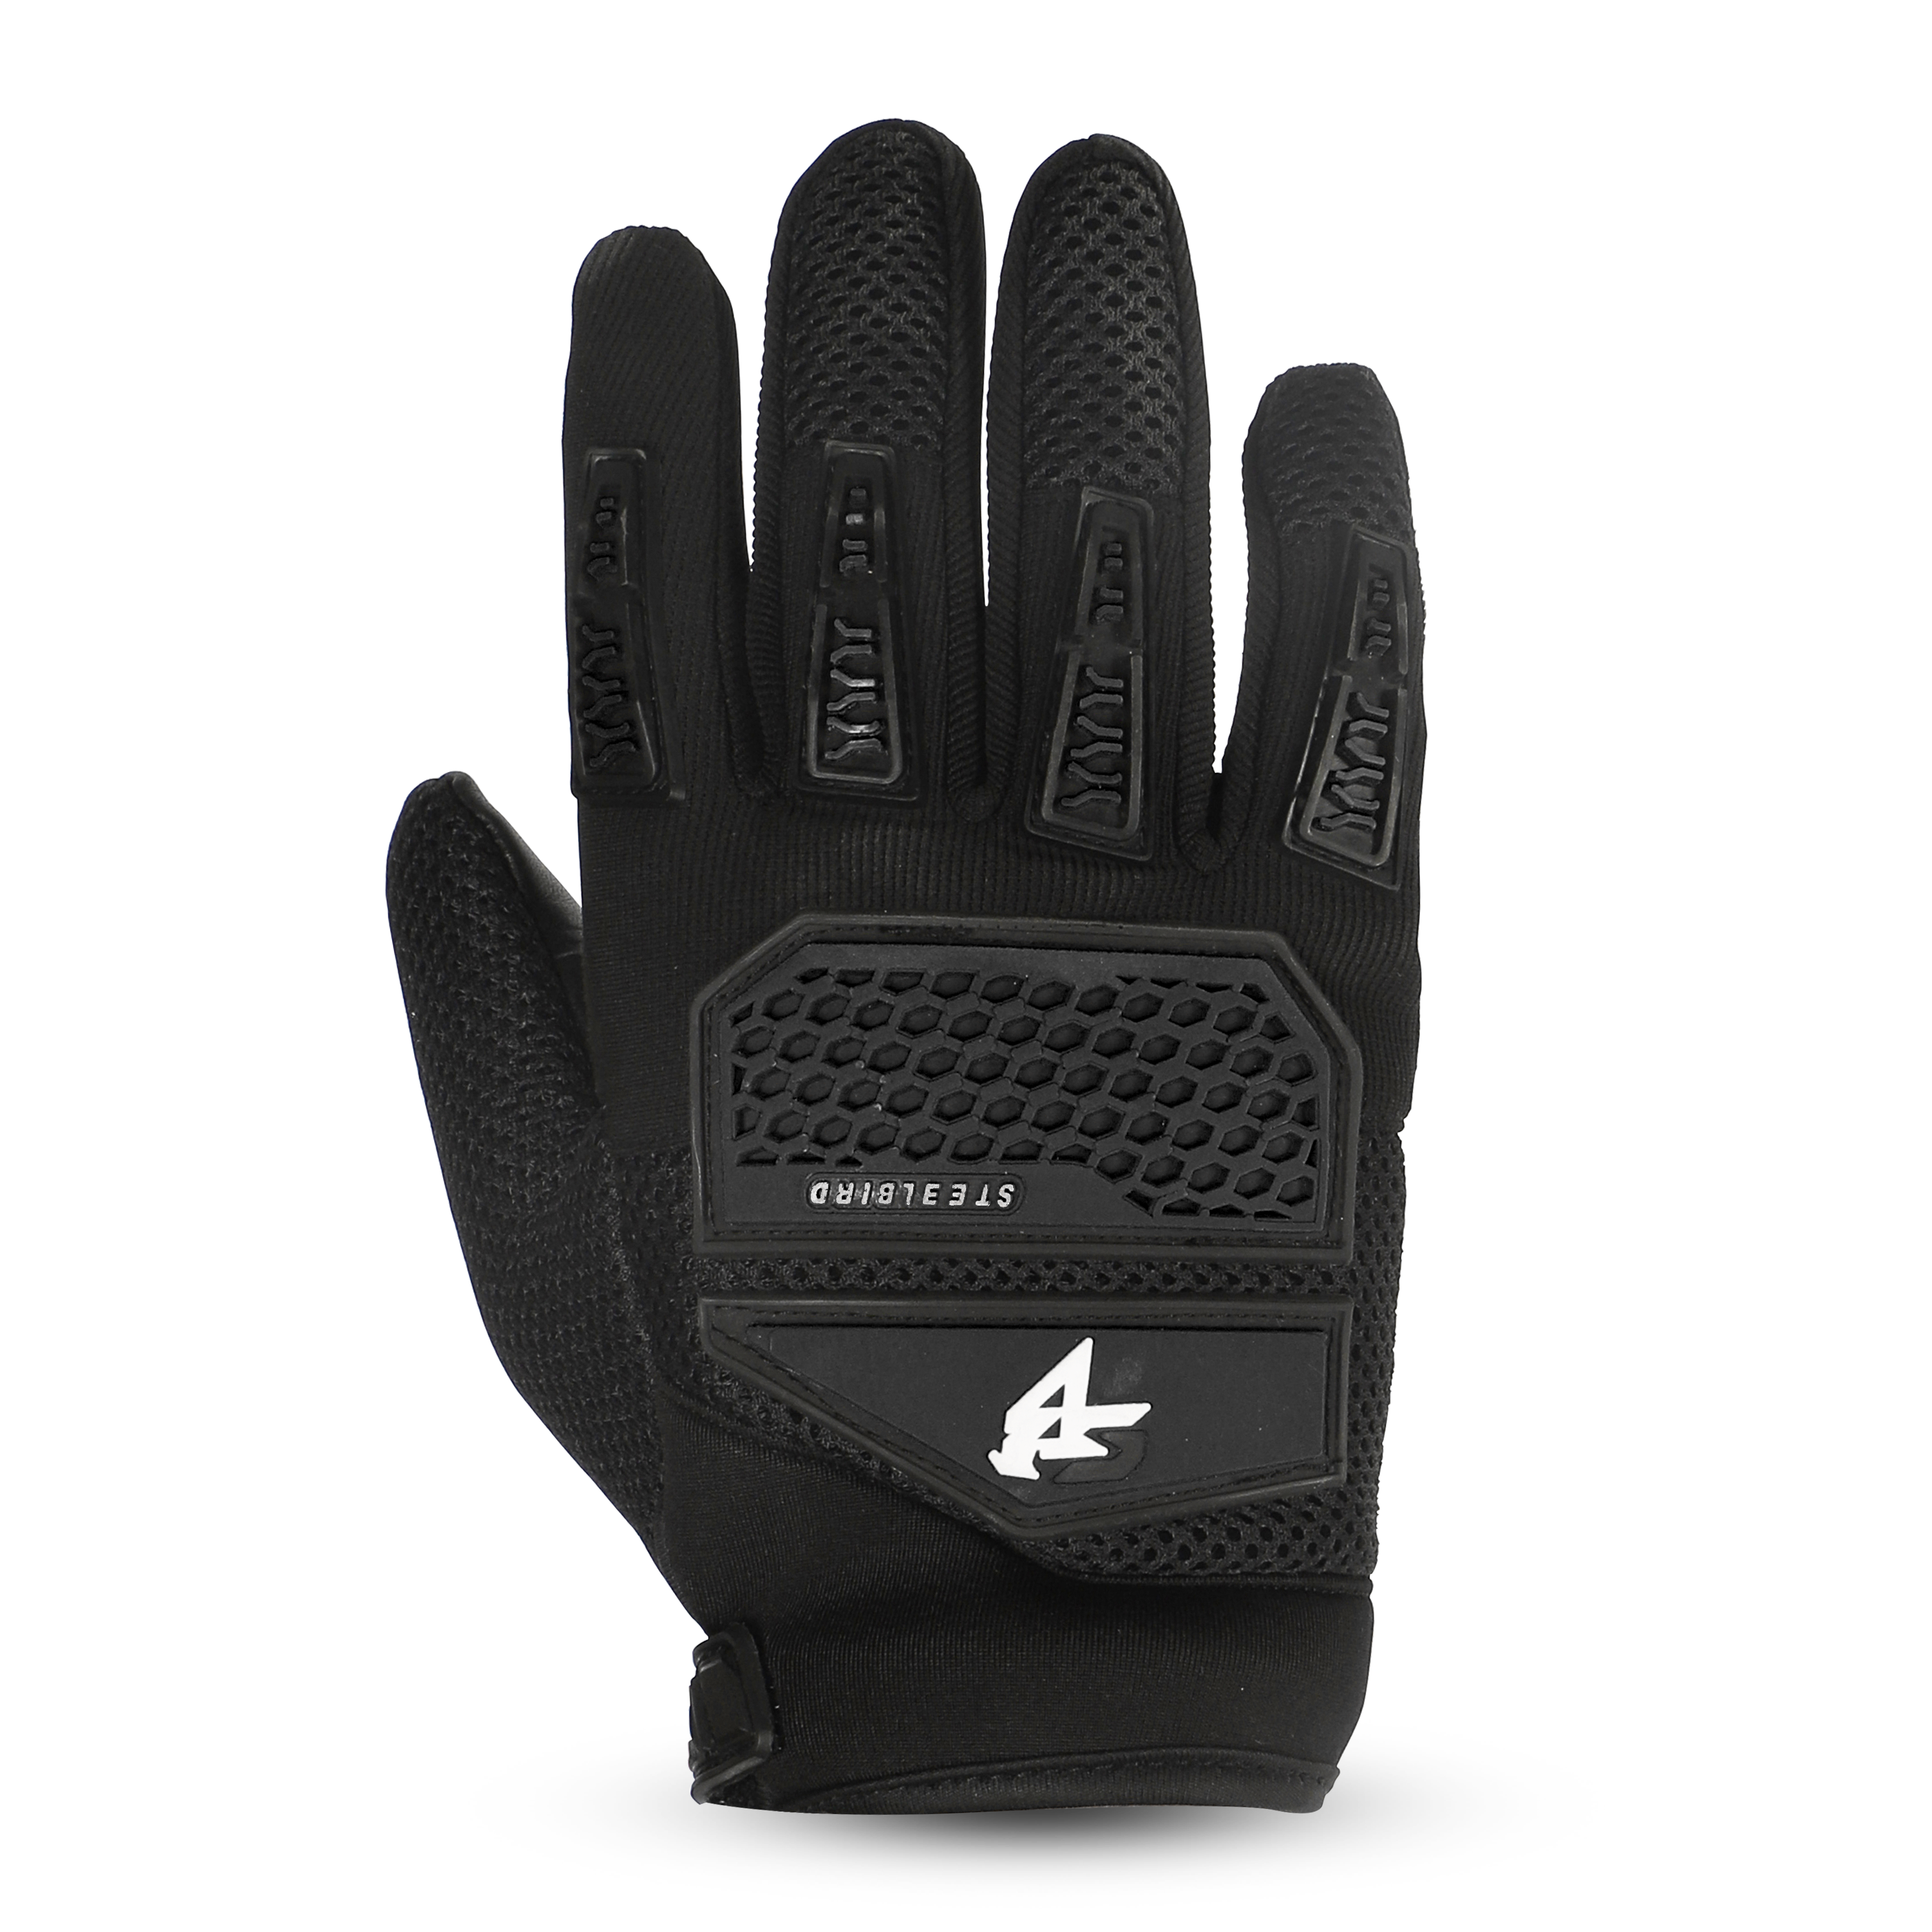 Steelbird Rider-Pro Full Finger Gloves- Black